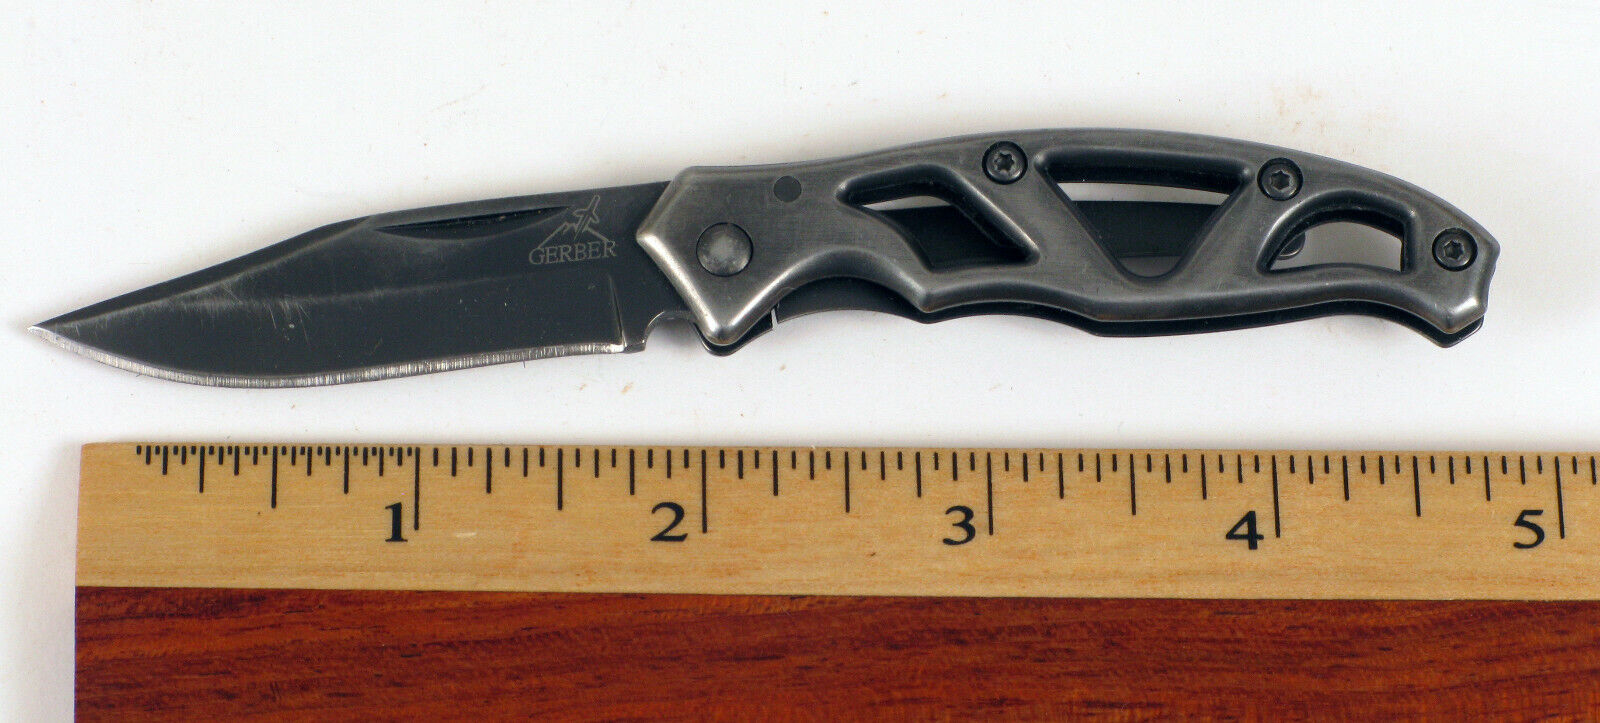 VINTAGE GERBER LEGENDARY BLADES LOCKING POCKET KNIFE STEEL HANDLE QUALITY USED 